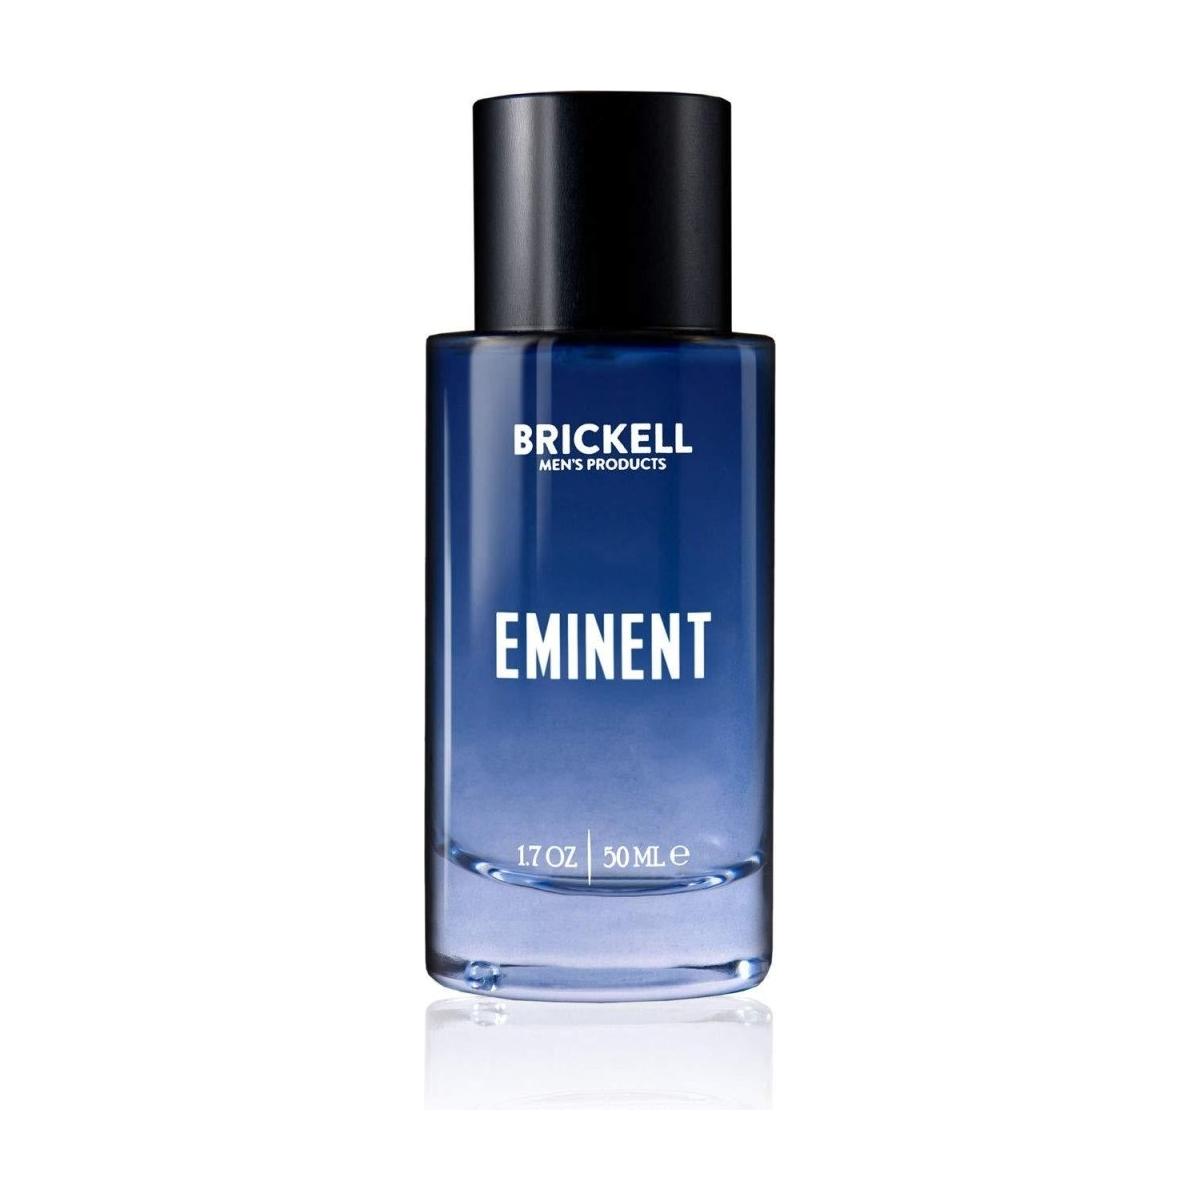 Brickell Eminent Cologne - 50ml - Glam Global UK